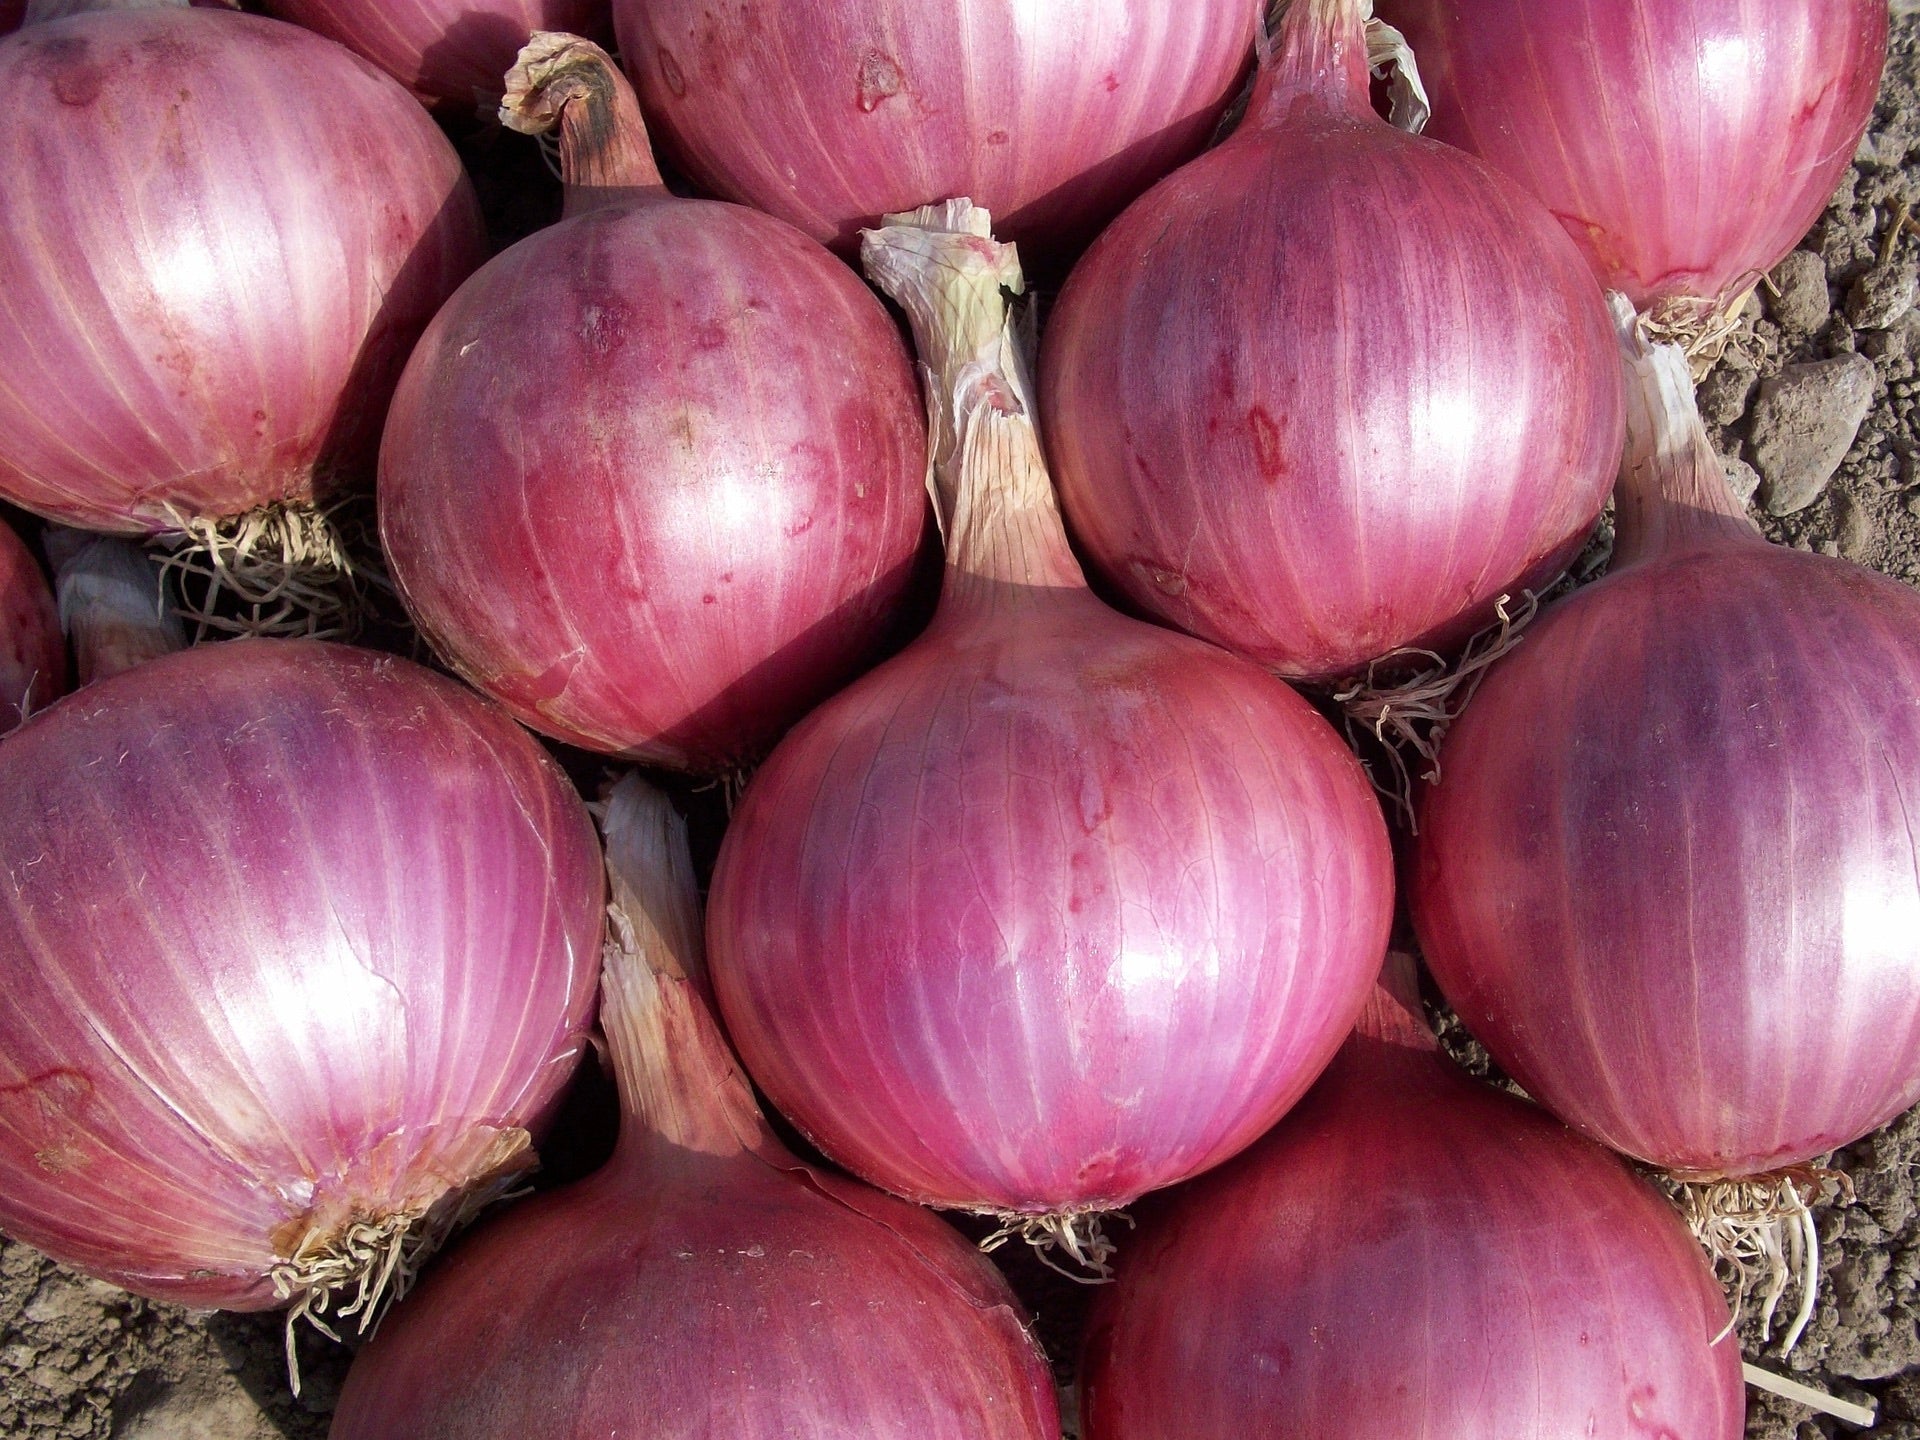 USA Organic Onions - Red